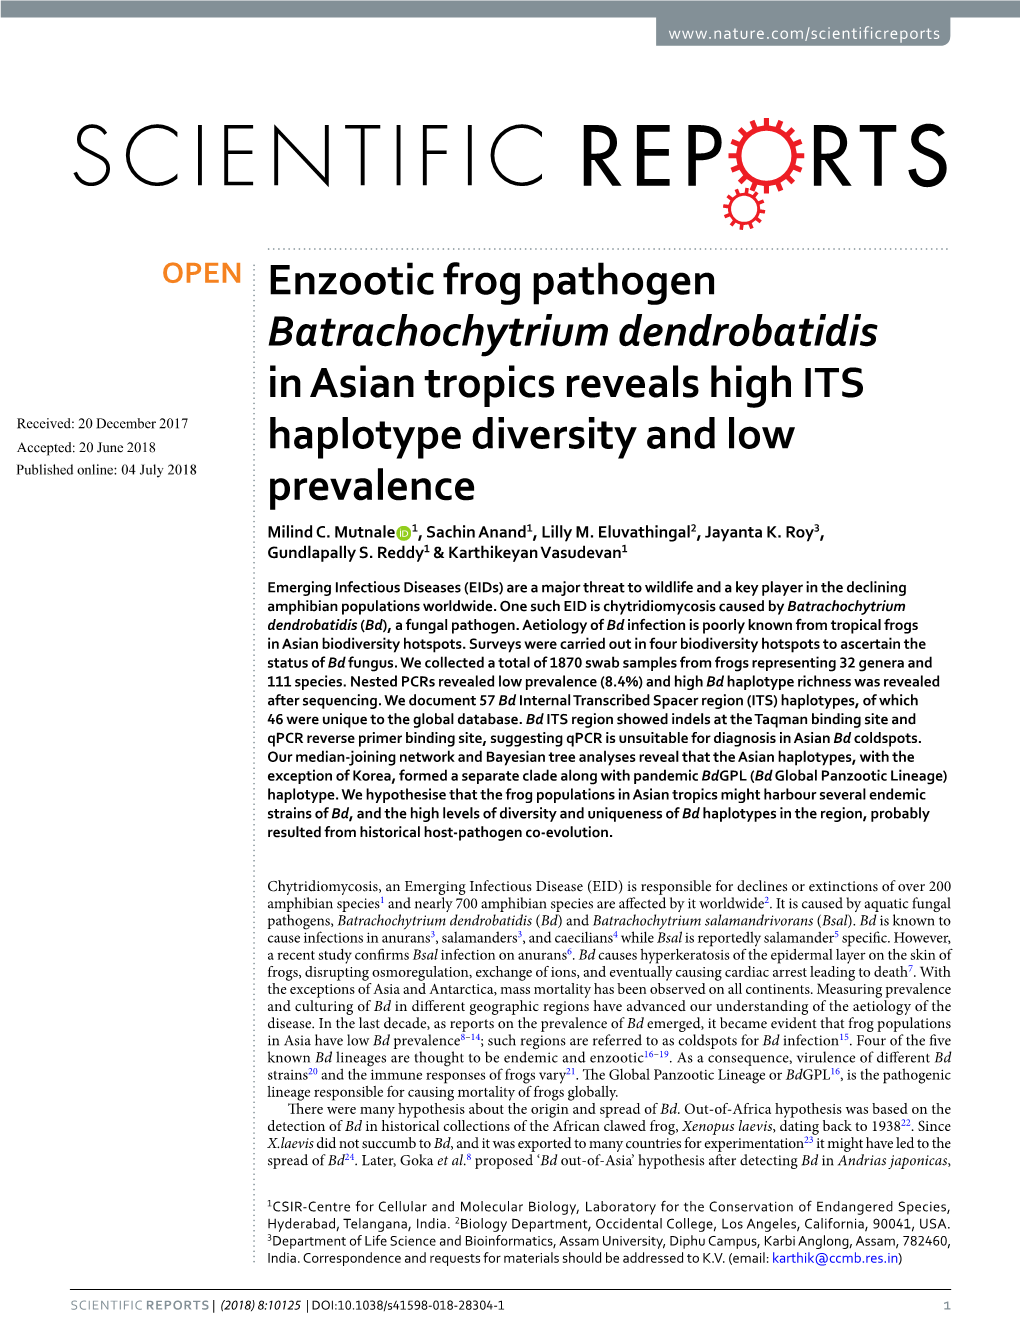 Enzootic Frog Pathogen Batrachochytrium Dendrobatidis in Asian Tropics Reveals High ITS Haplotype Diversity and Low Prevalence